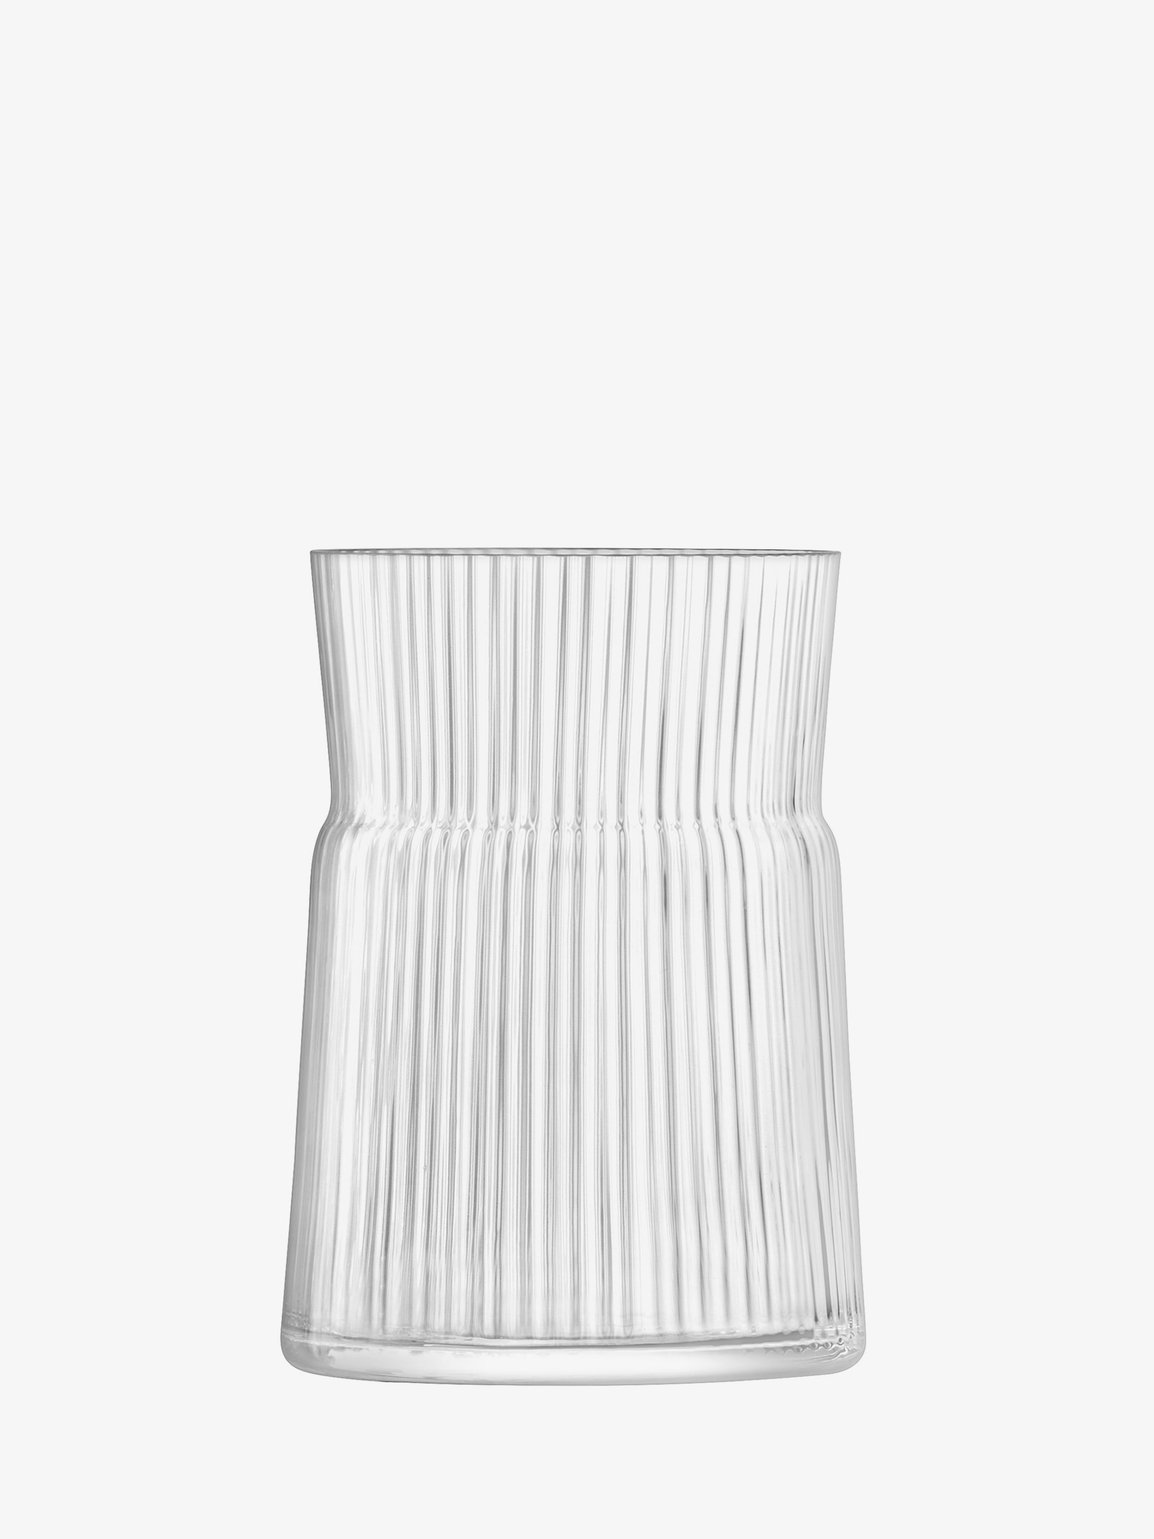 Lantern/Vase H18.5cm